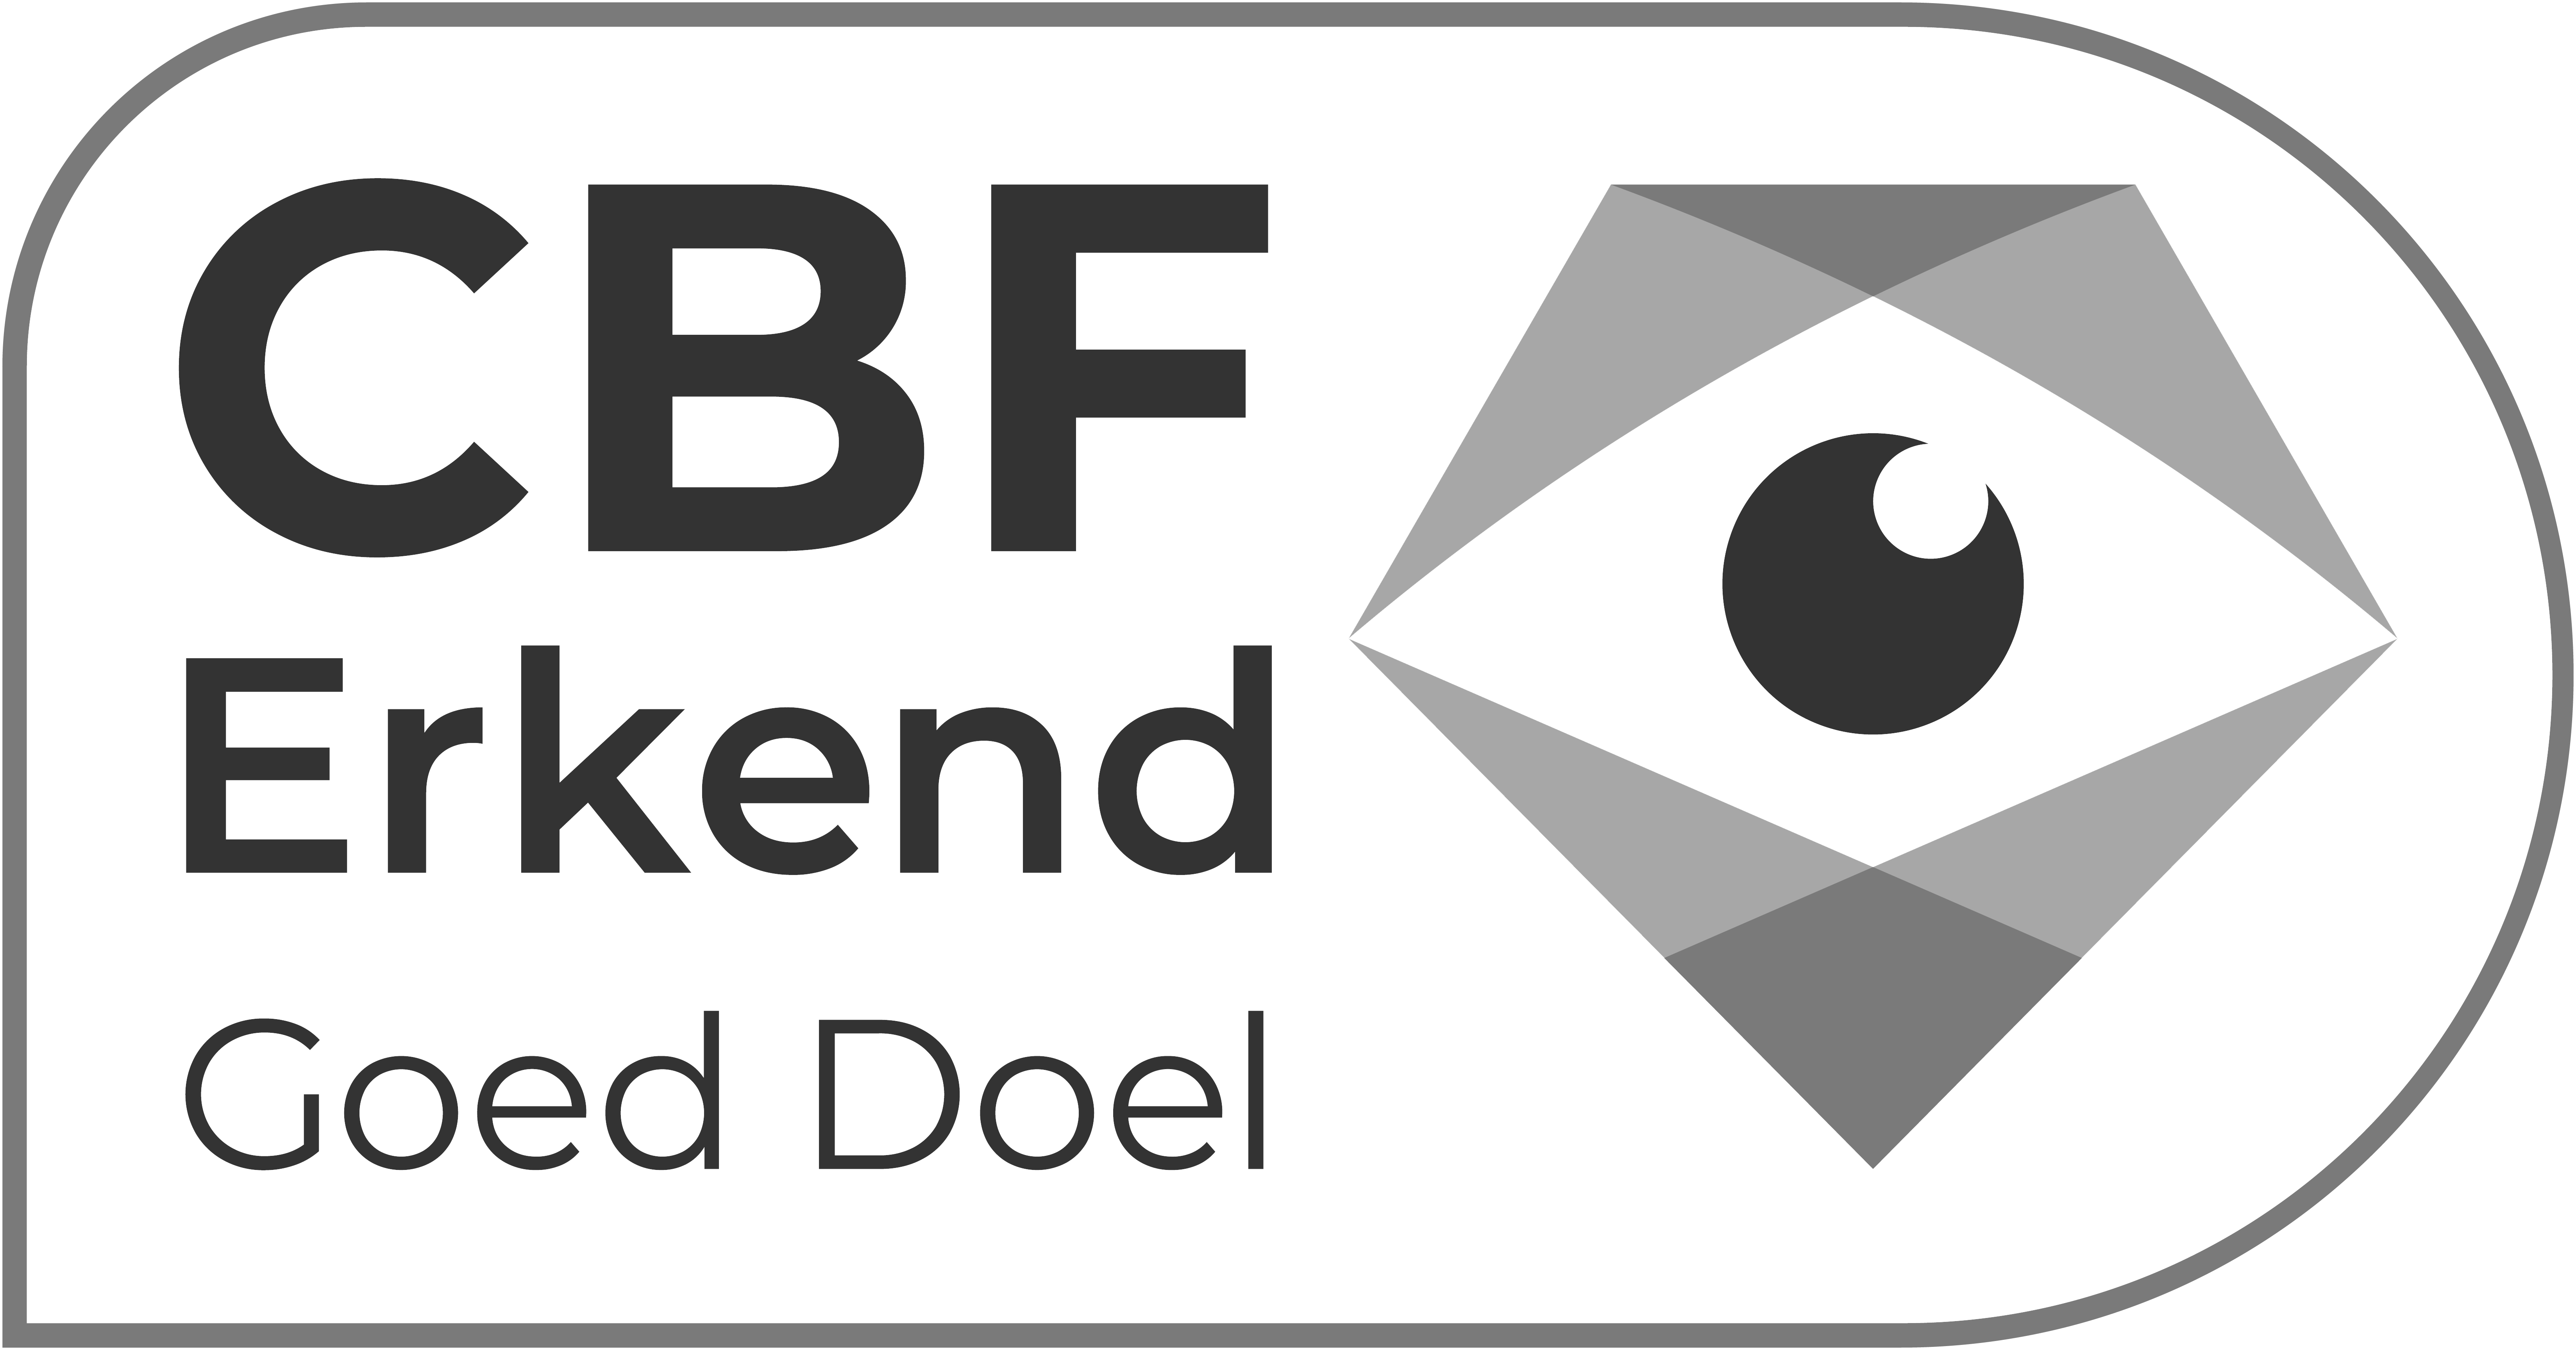 Logo van CBF